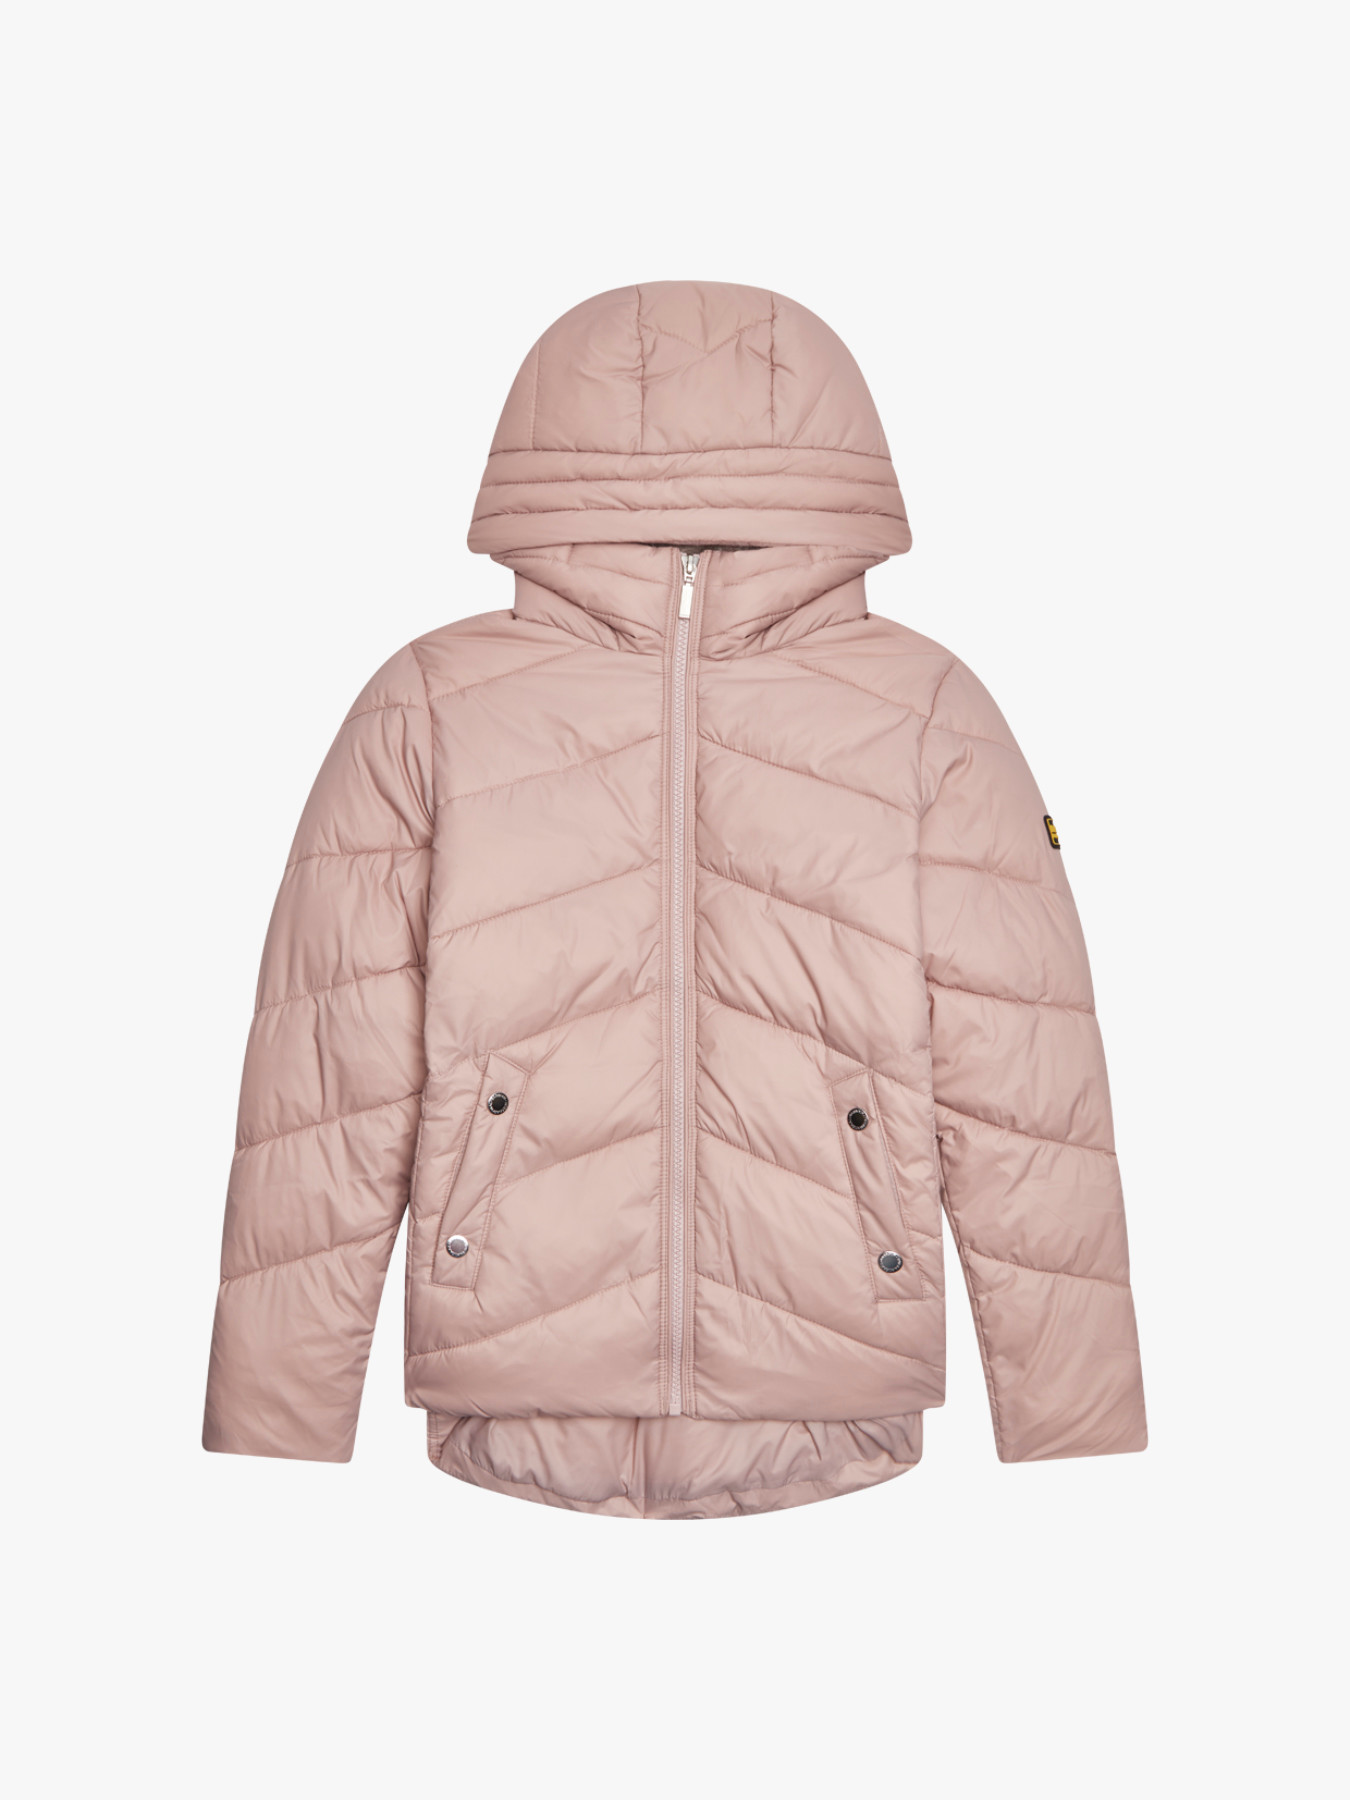 Barbour International Motegi Quilt Jacket | Coats & Jackets | Fenwick